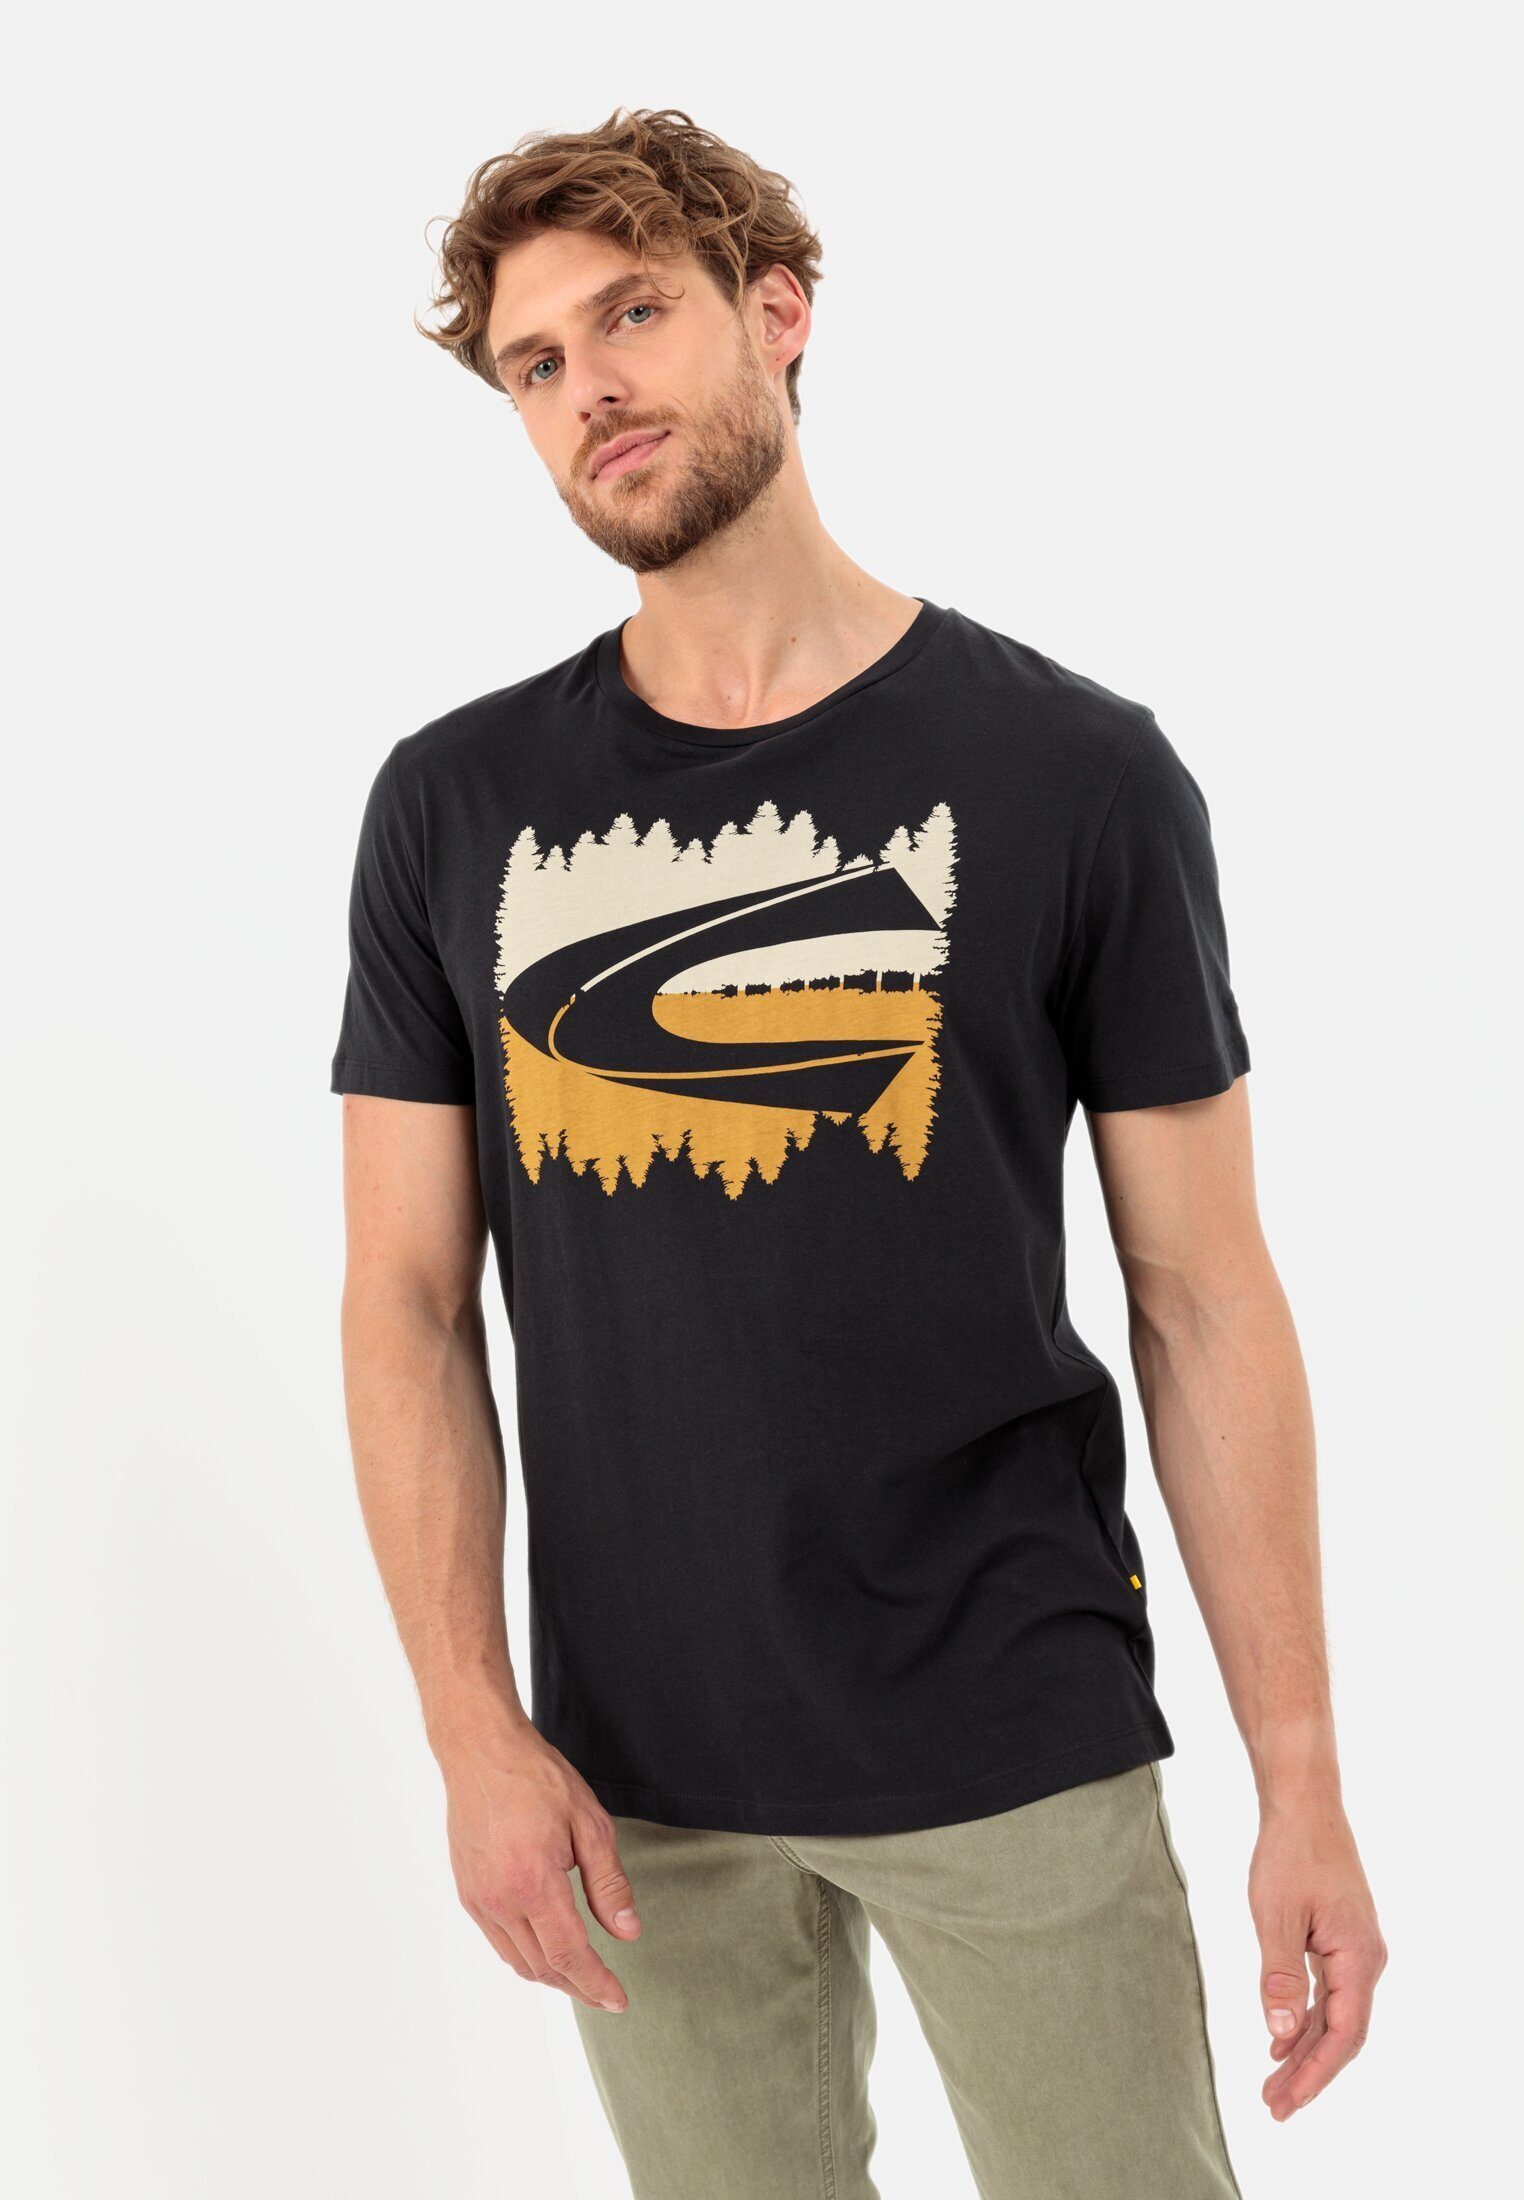 Schwarz Organic T-Shirt active Cotton camel aus